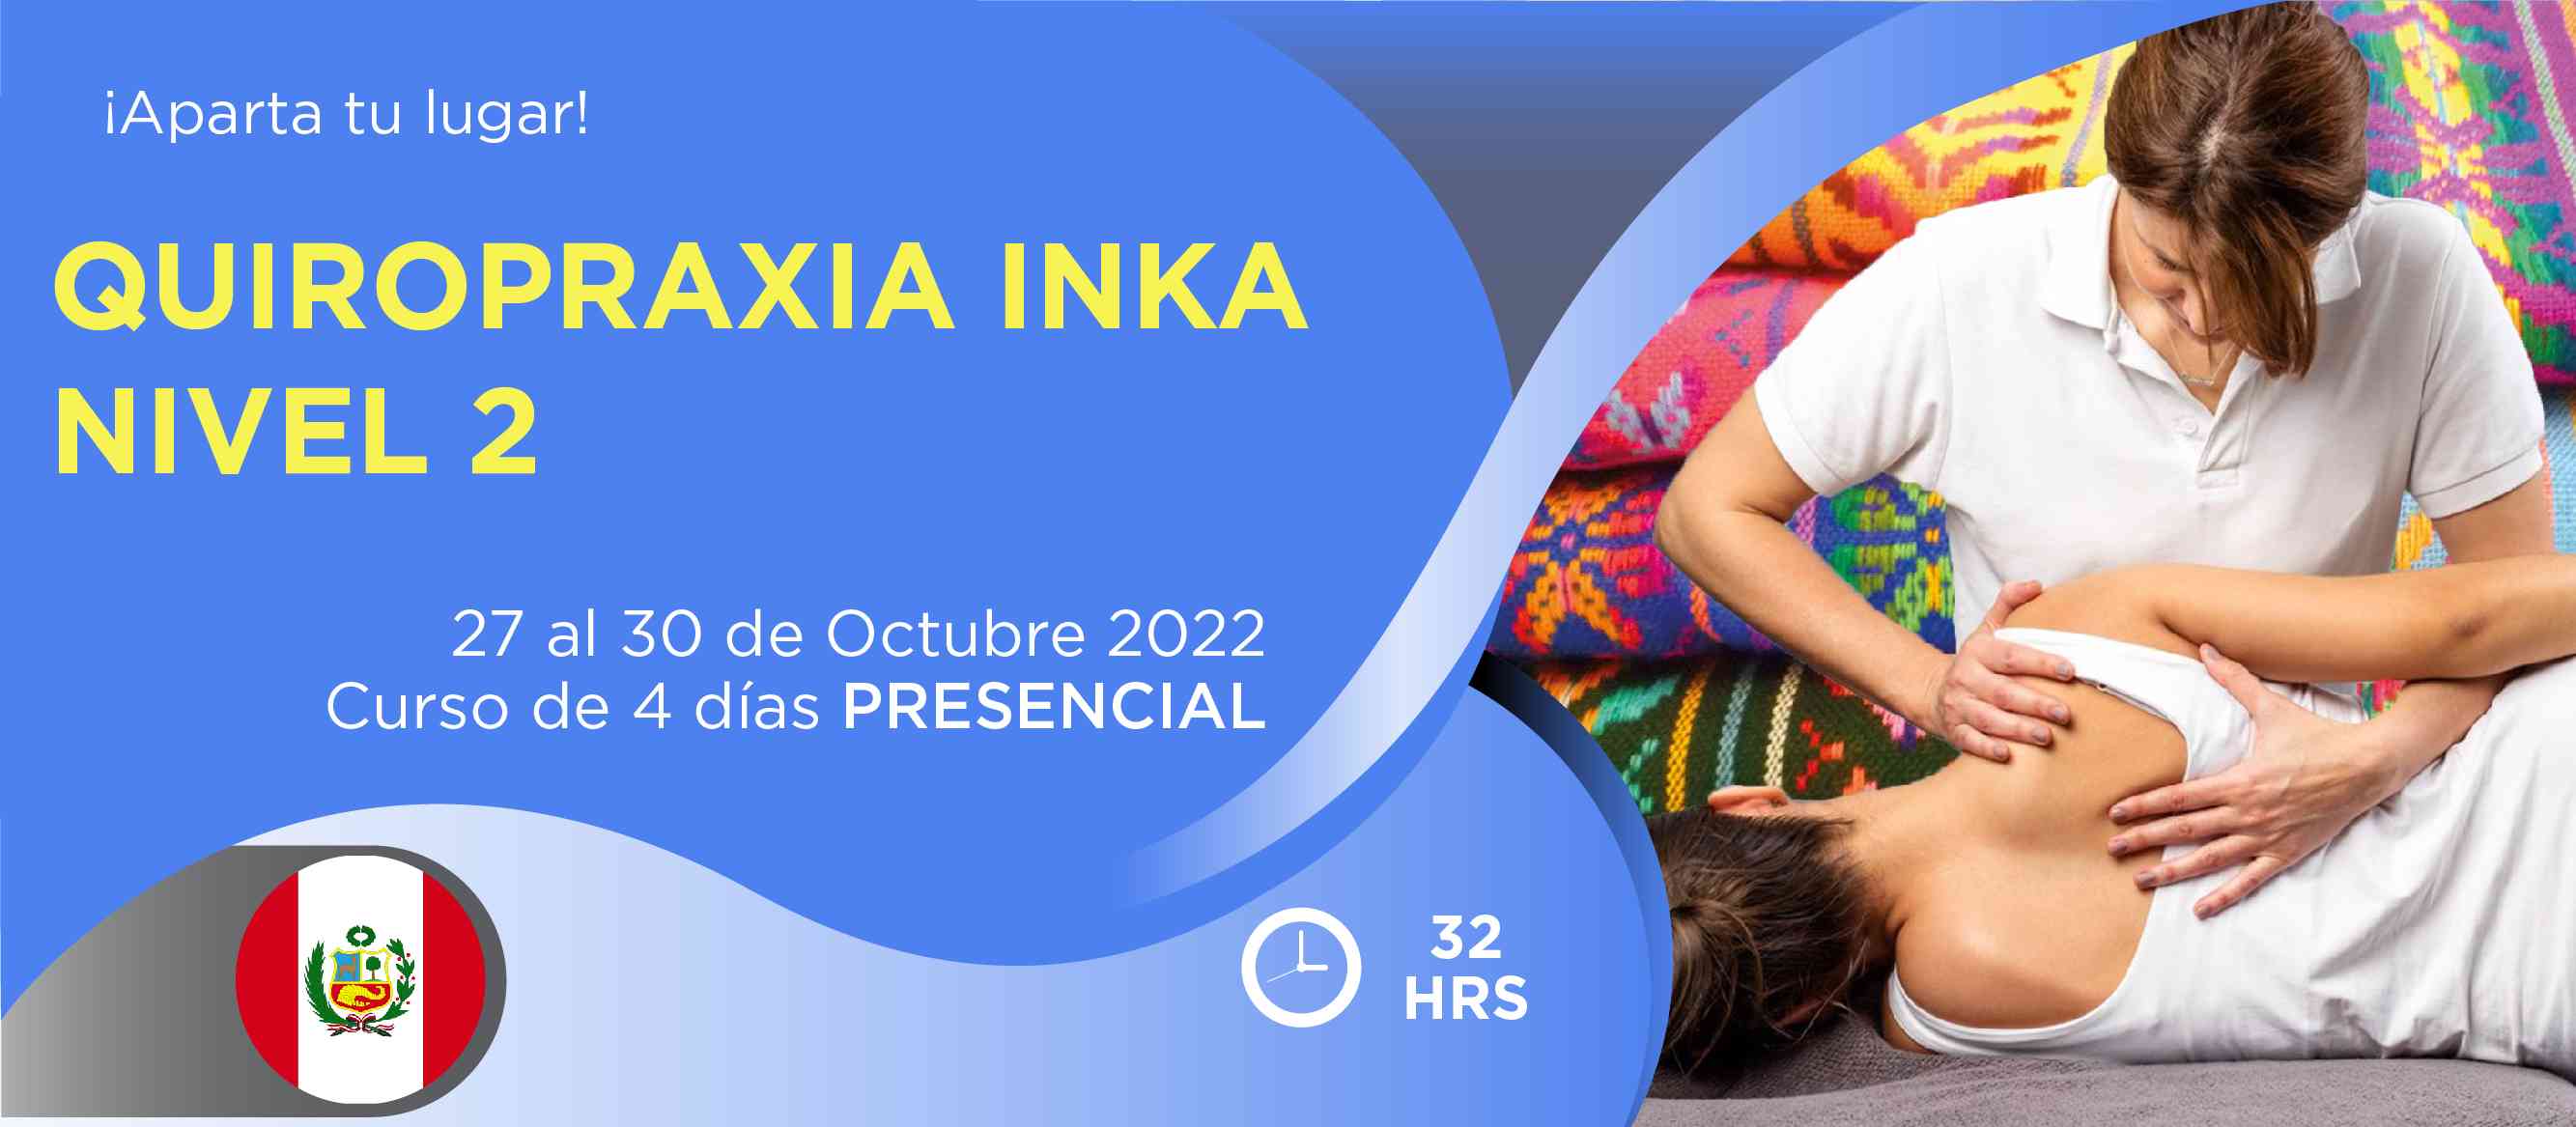 Banner para el curso de QUIROPRAXIA INKA NIVEL 2>